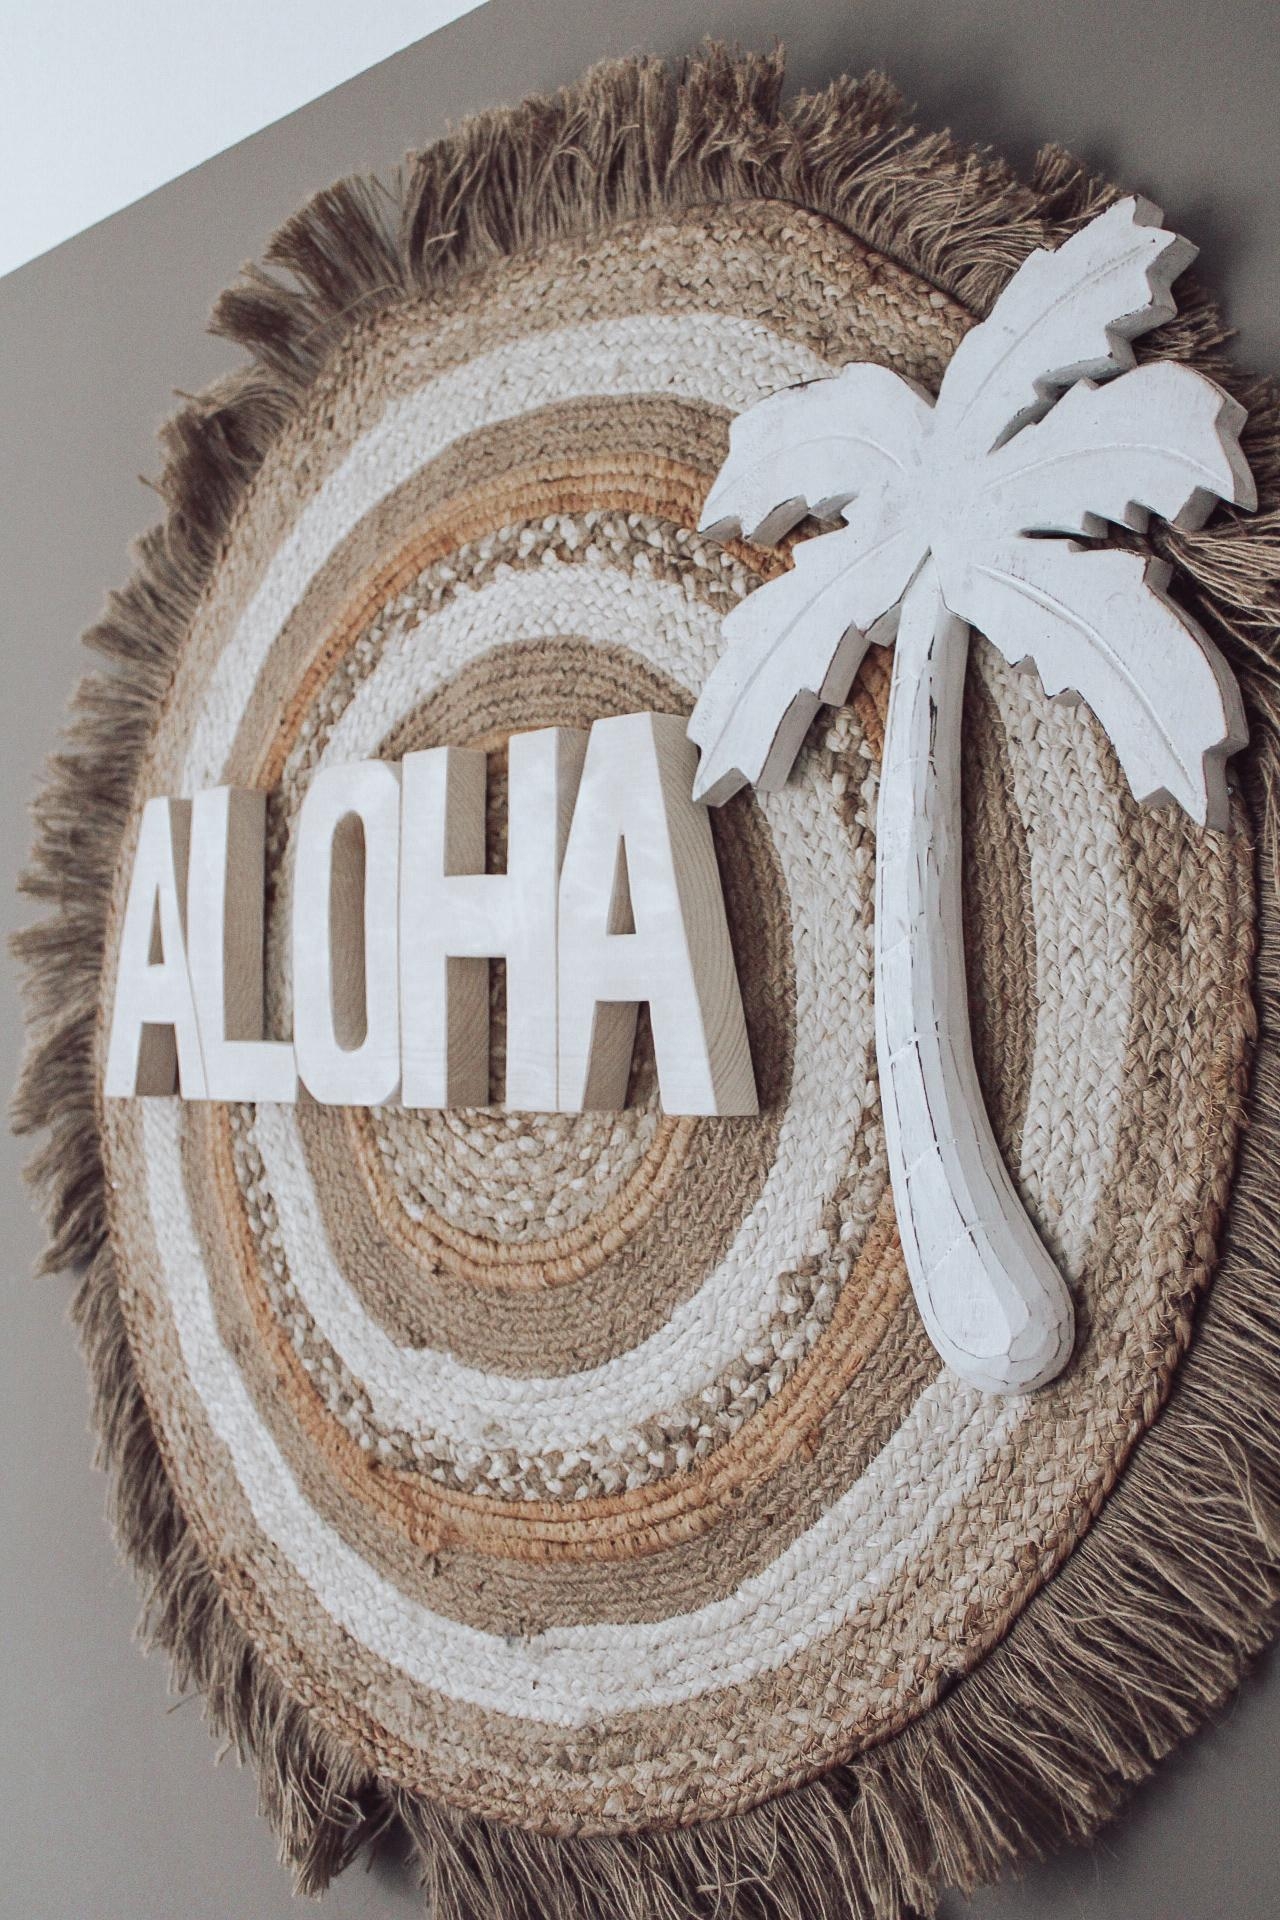 Live ☼ Aloha | Wanddekoration Aloha mit Palme und Bohoteppich. #bohostyle #onlineshop #aloha #paradise #summerlove #couchstyle